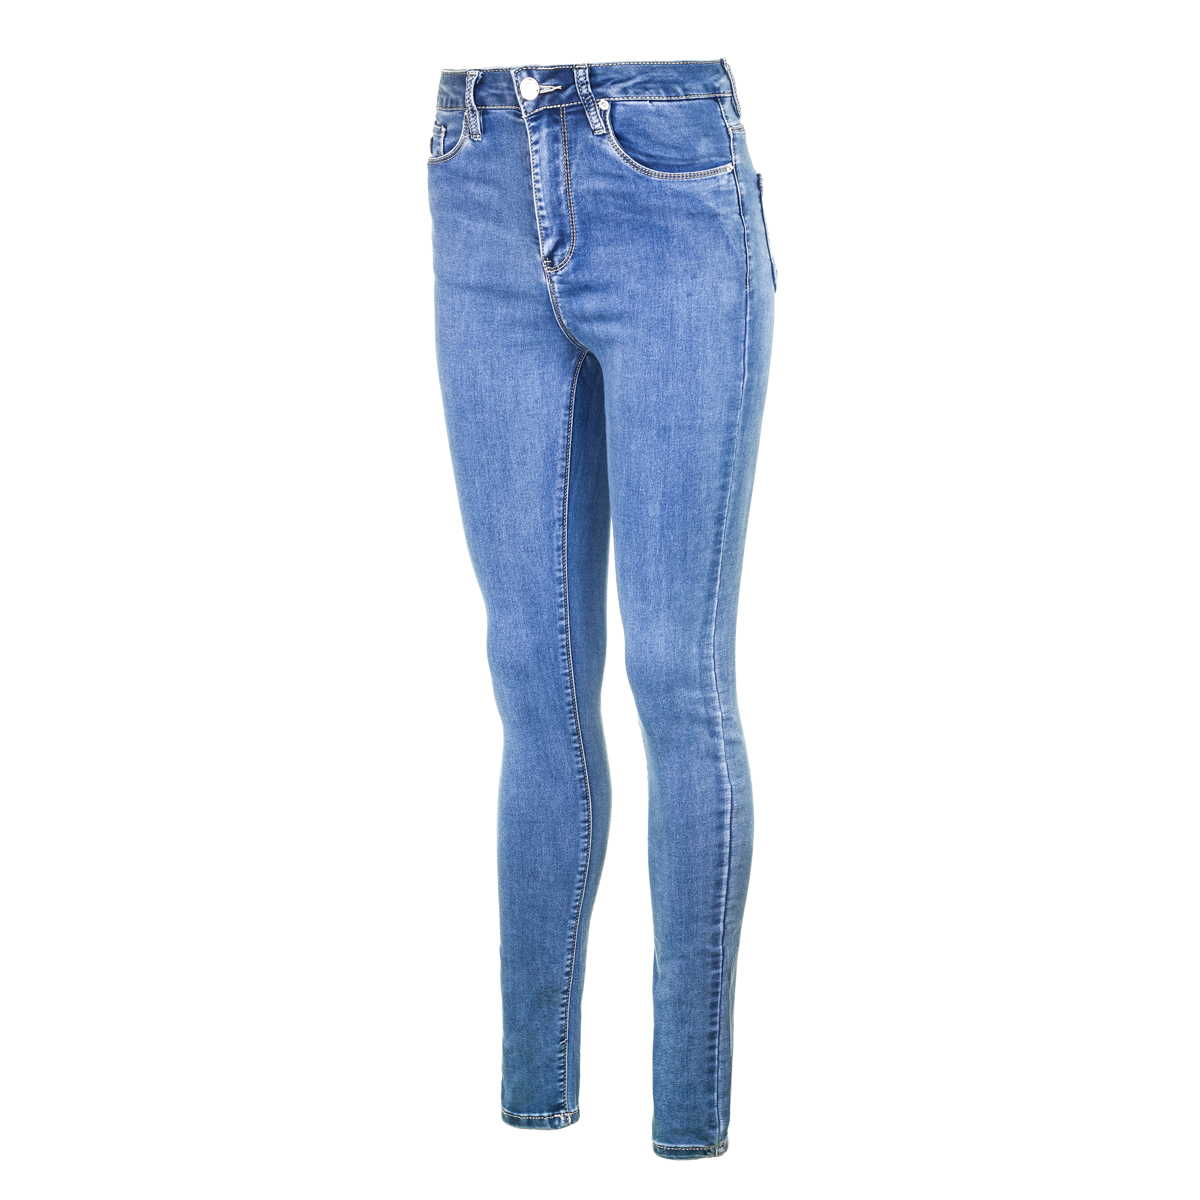 Жен. джинсы арт. 12-0086 Голубой р. 26 Китай, размер 26 - фото 2